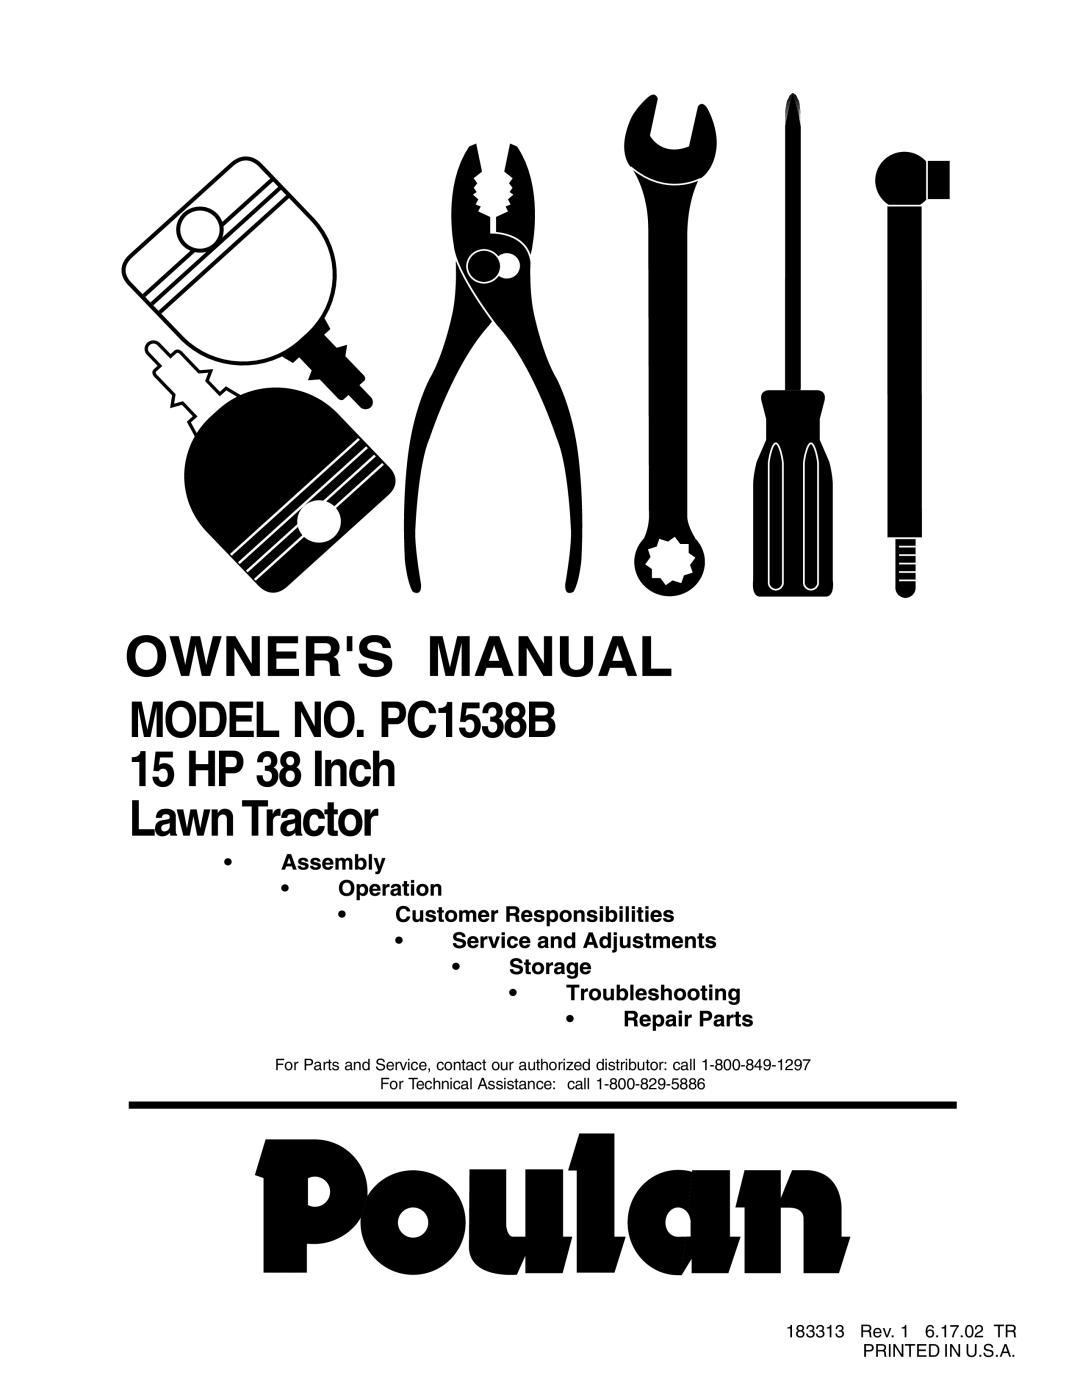 Poulan 183313 manual MODEL NO. PC1538B 15 HP 38 Inch Lawn Tractor 